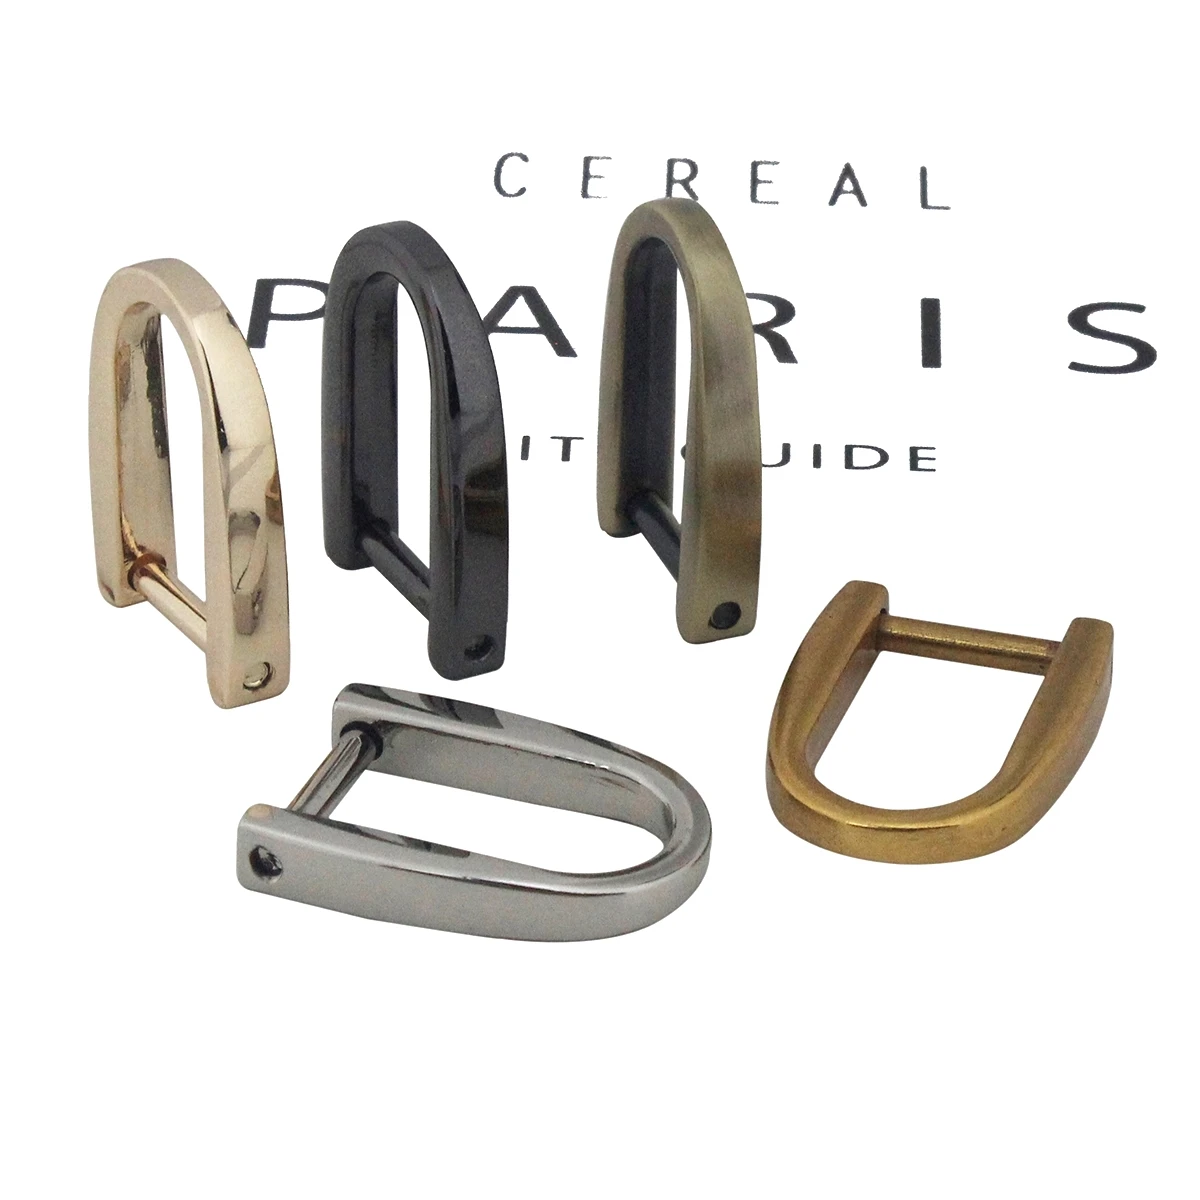 

10pcs Metal Detachable Open Screw D Ring Buckle Shackle Clasp for Leather Craft Bag Strap Belt Handle Shoulder Webbing